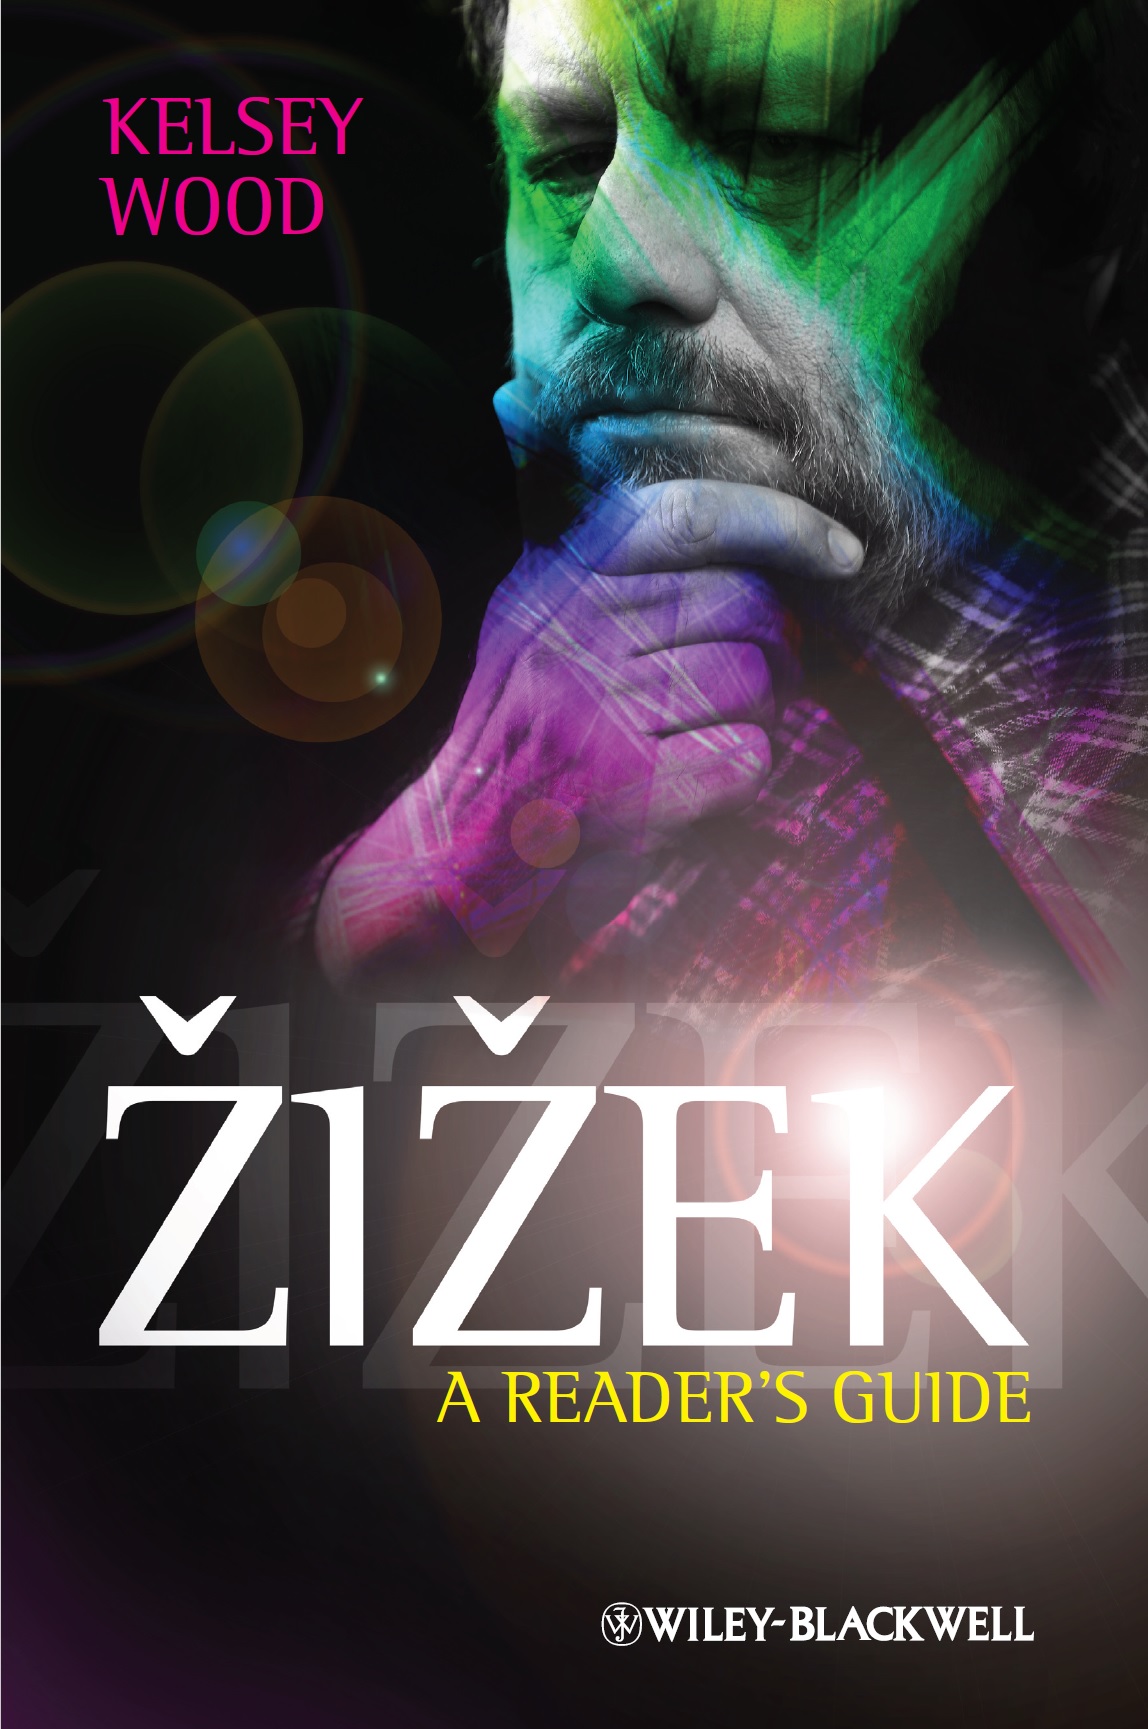 Kelsey-wood-zizek-a-readers-guide-theoryleaks.jpg